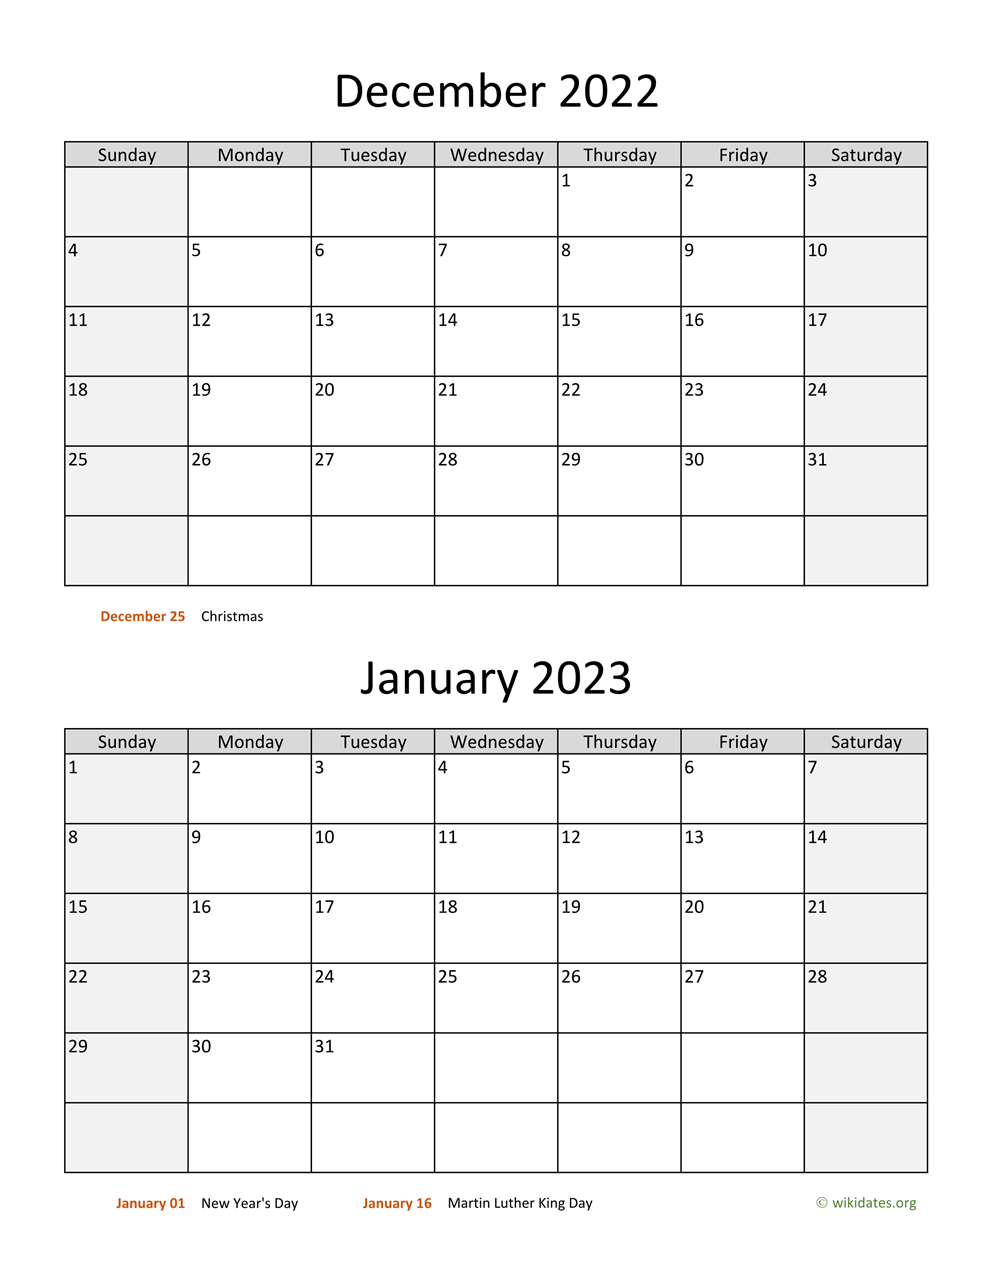 December 2022 January 2023 Calendar Printable December 2022 And January 2023 Calendar | Wikidates.org